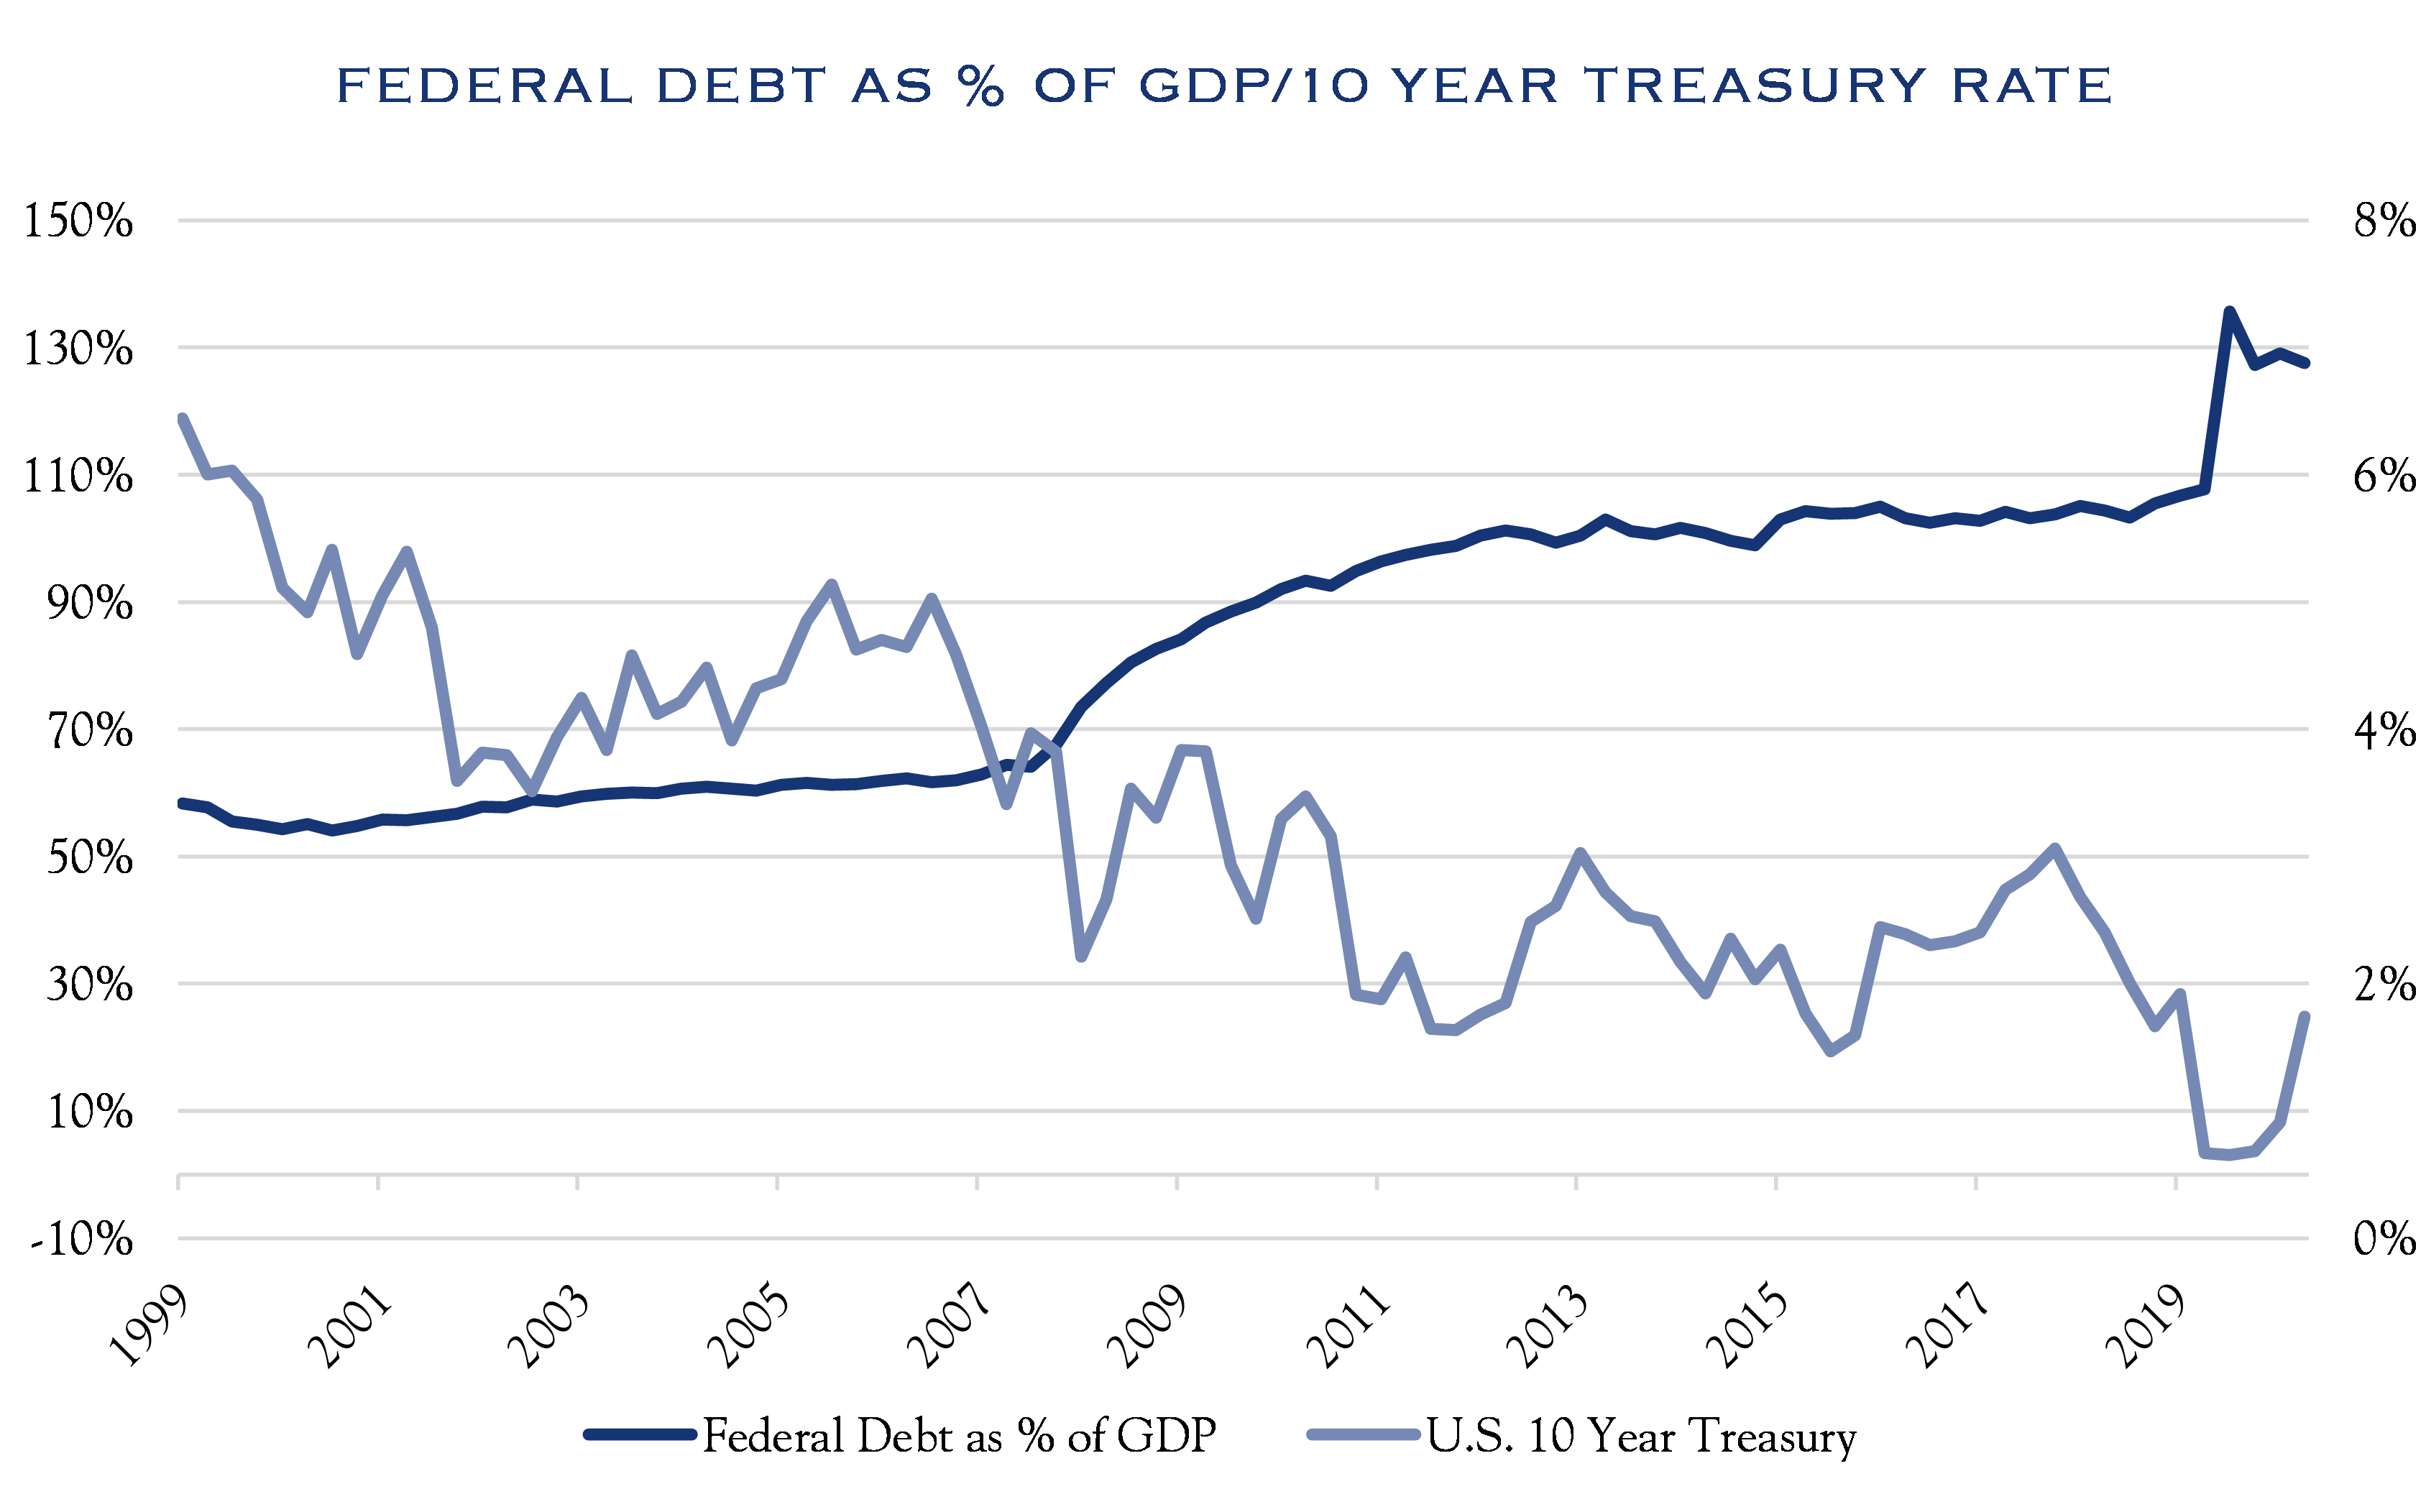 Federal Debt as % of GDP/10 Year Treasury Rate